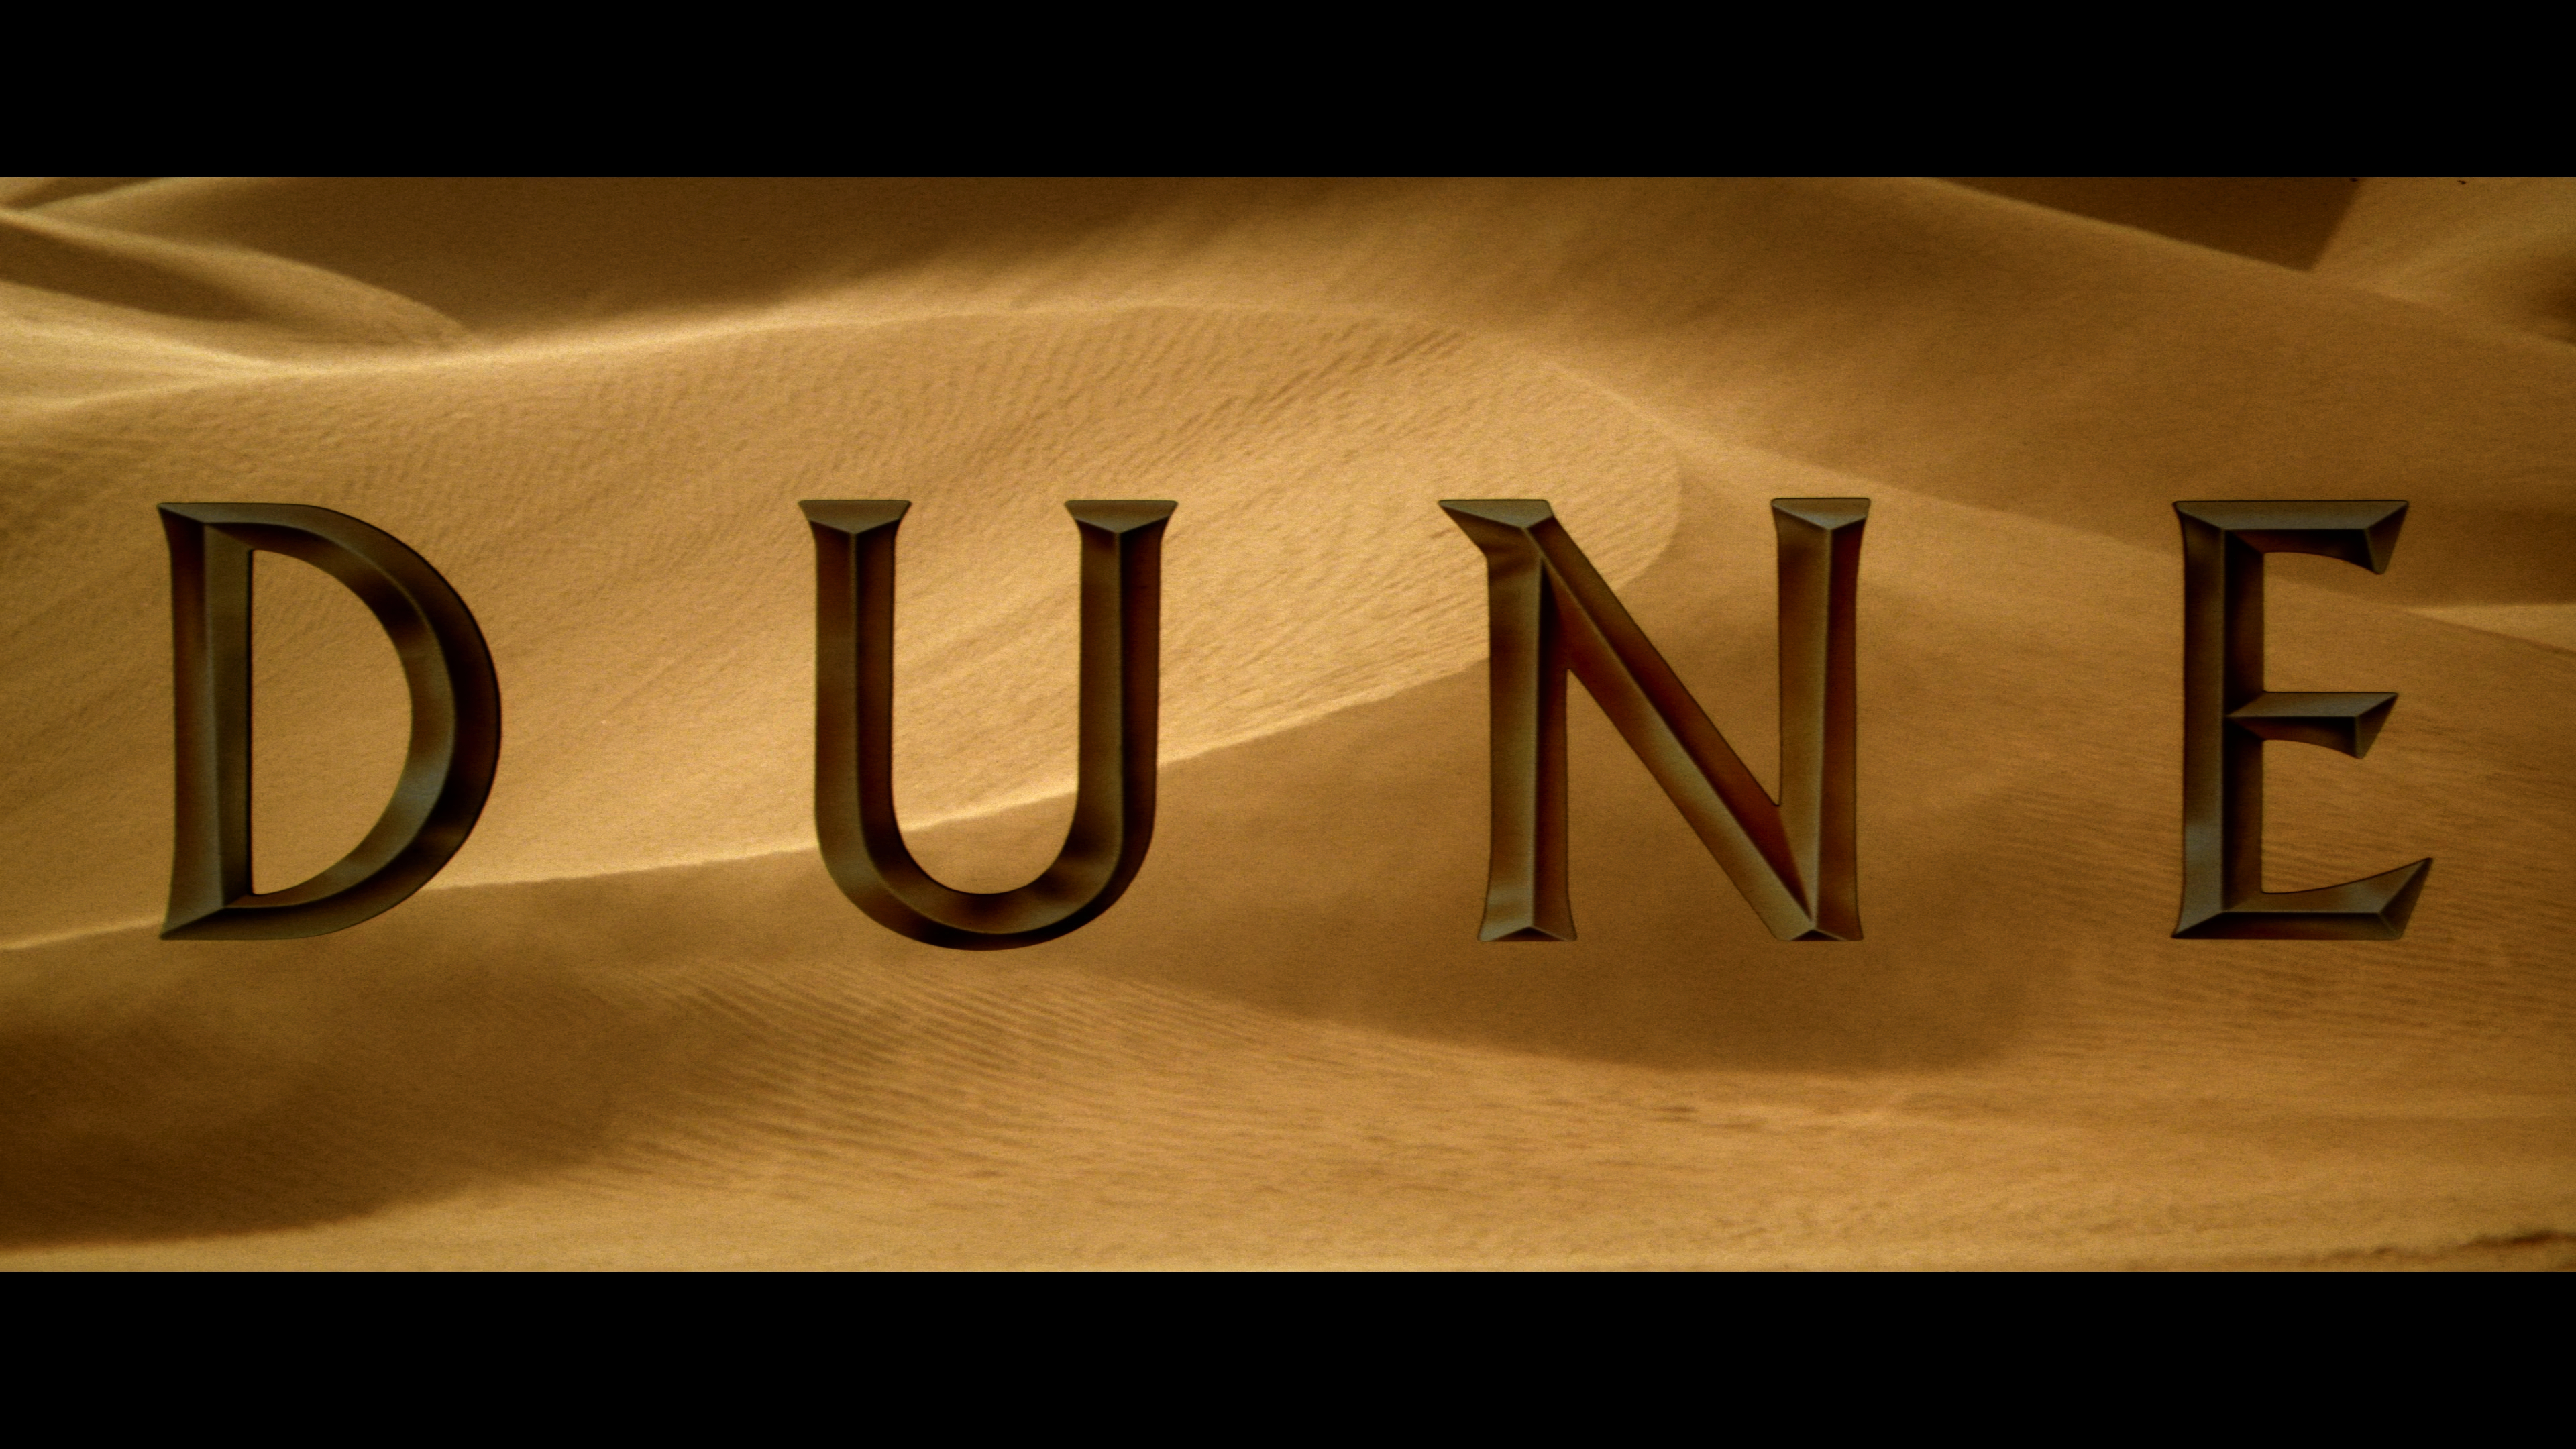 Dune 4K Blu-ray Shows Stellar Difference